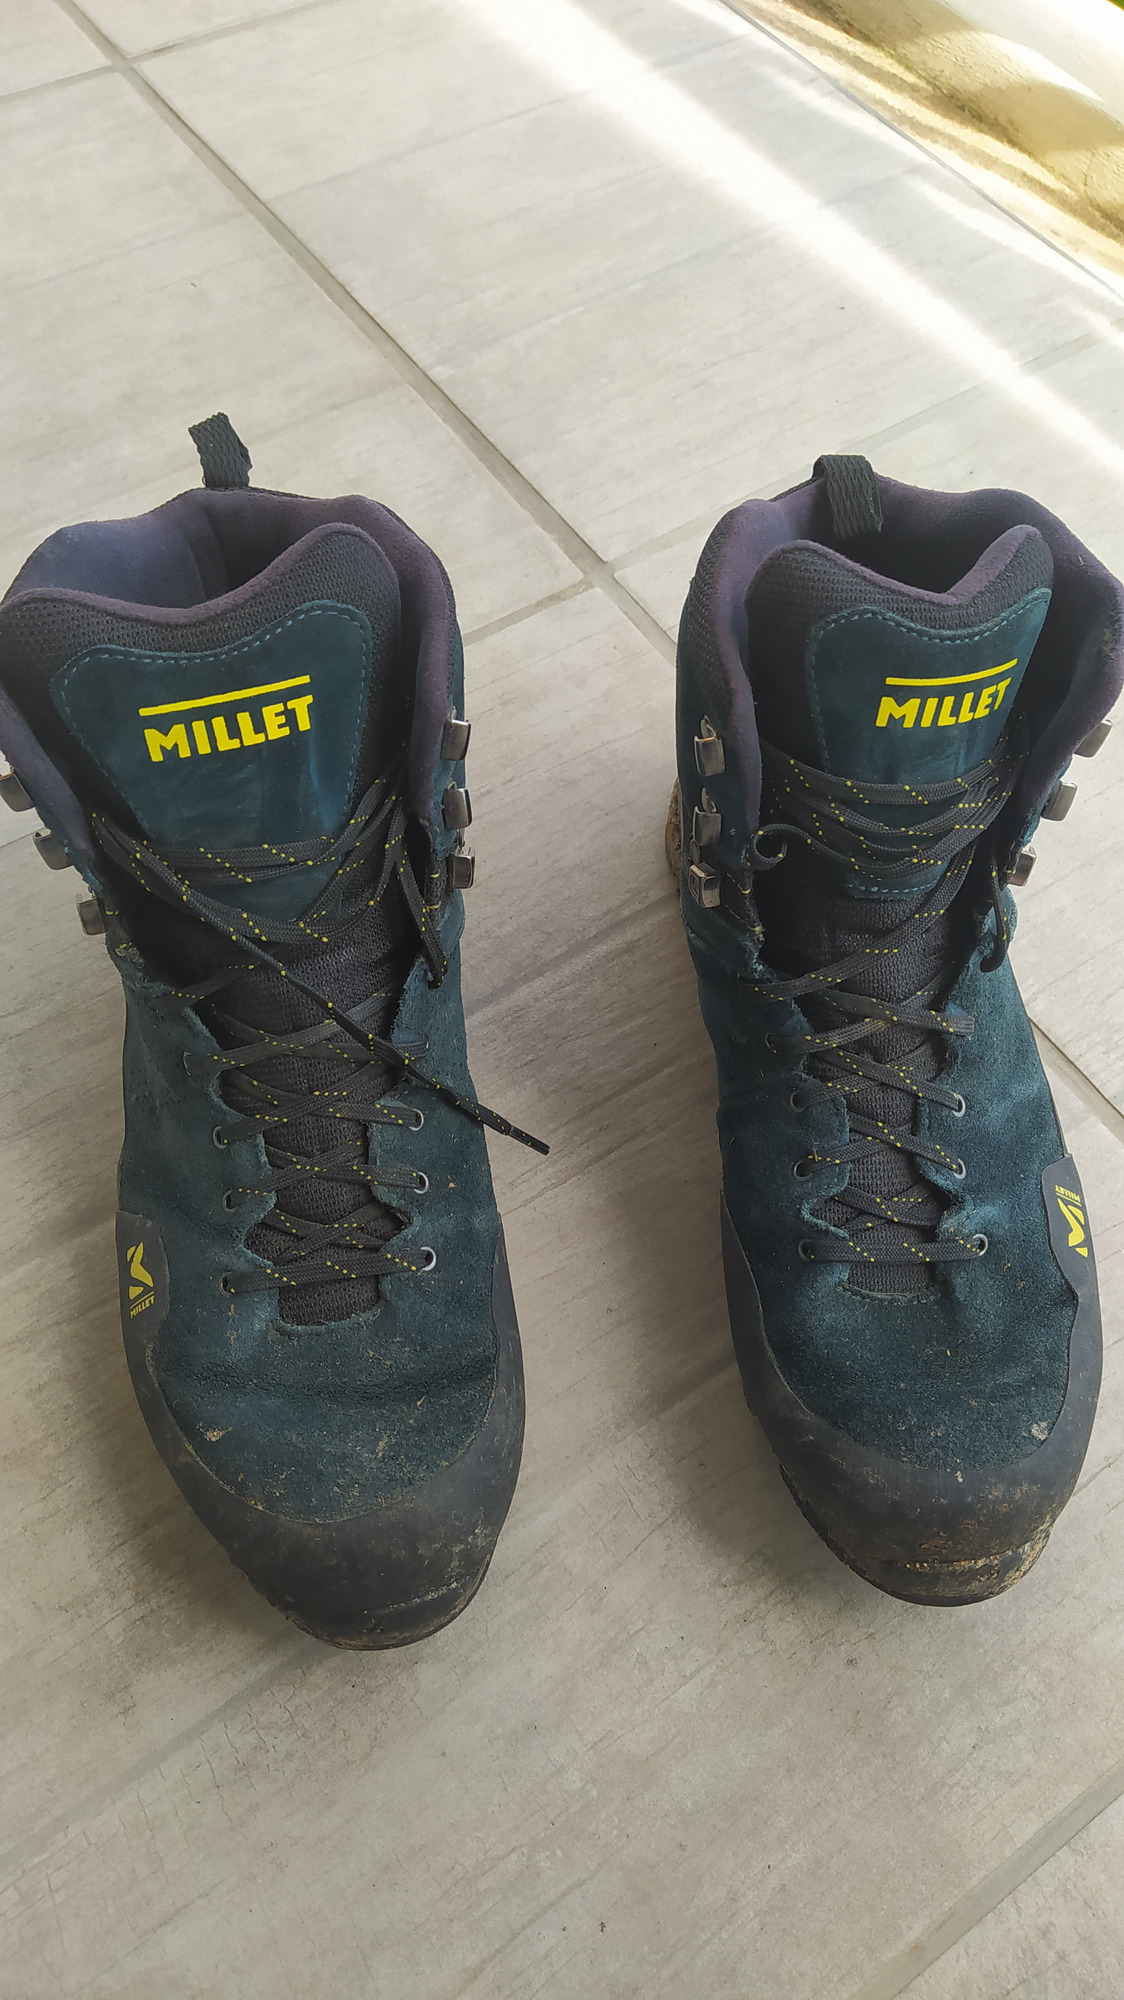 Millet Chaussures de trekking GORE-TEX - Homme - G Trek 4 GTX - Millet